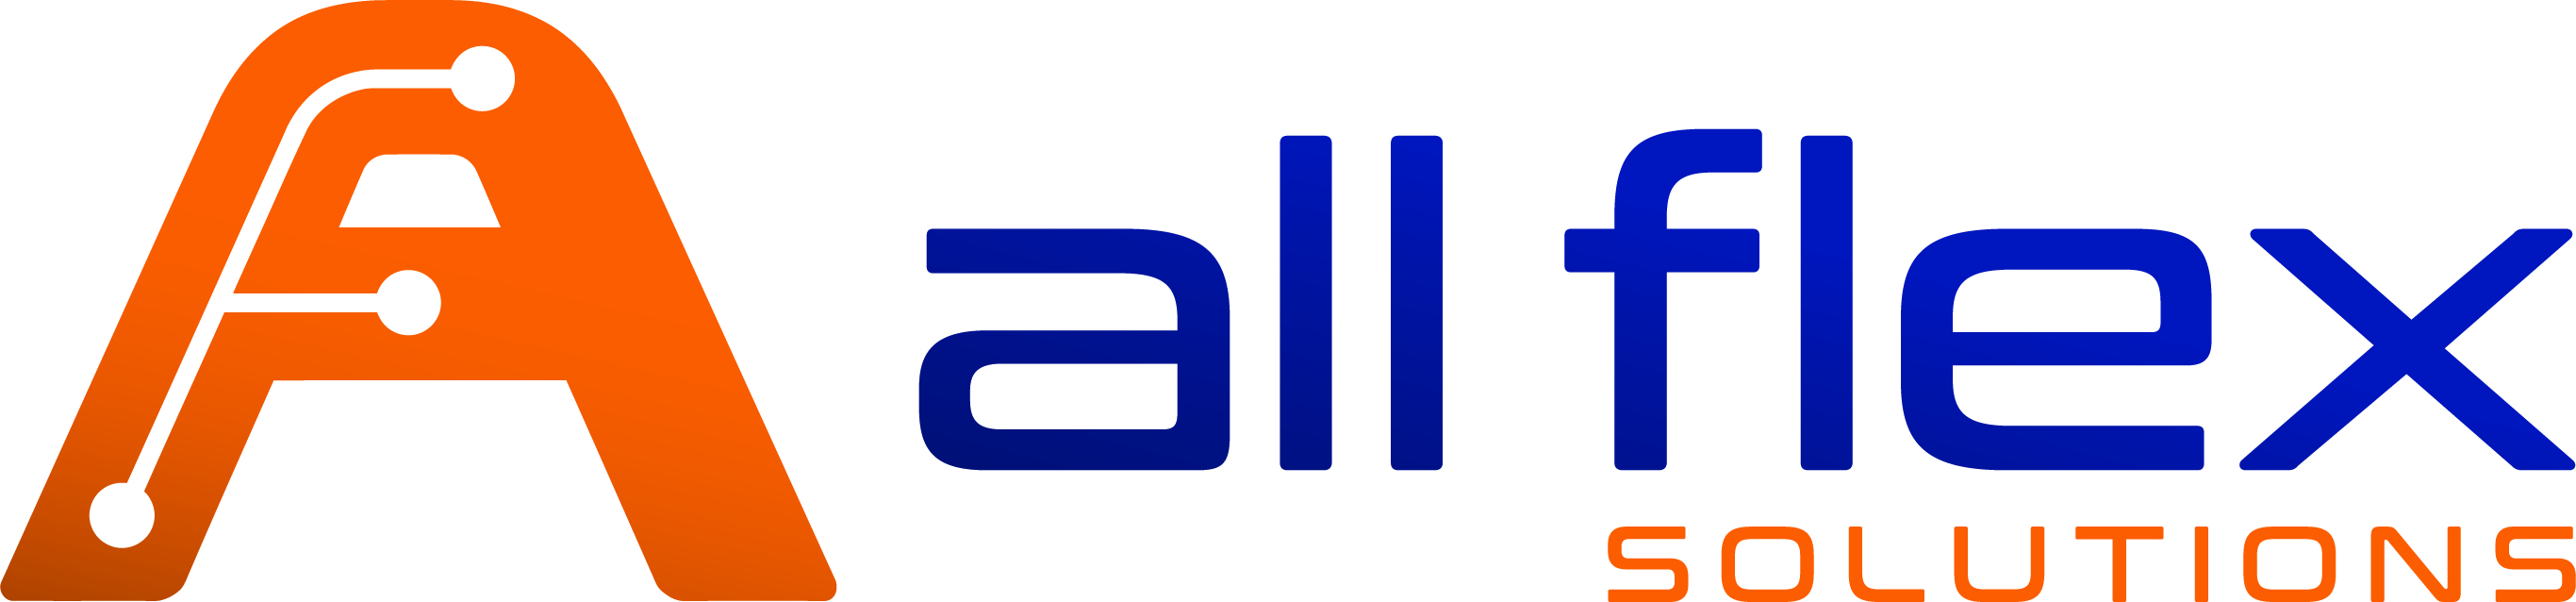 Allflex logo